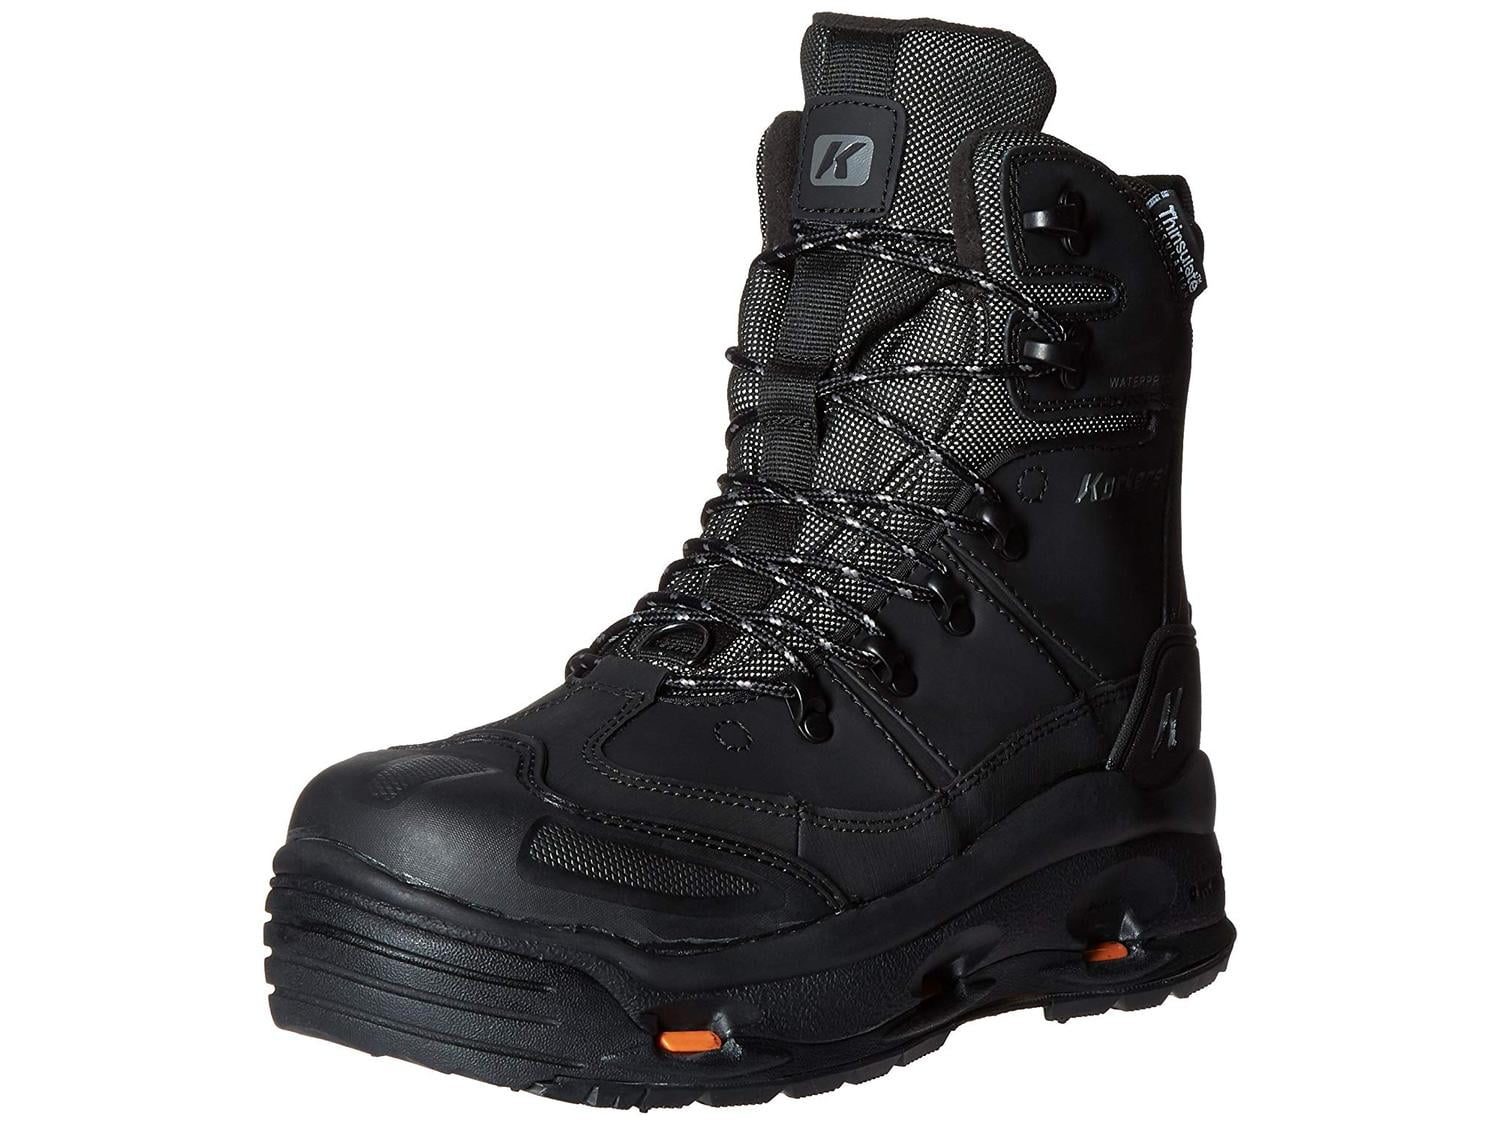 puncture resistant boots walmart